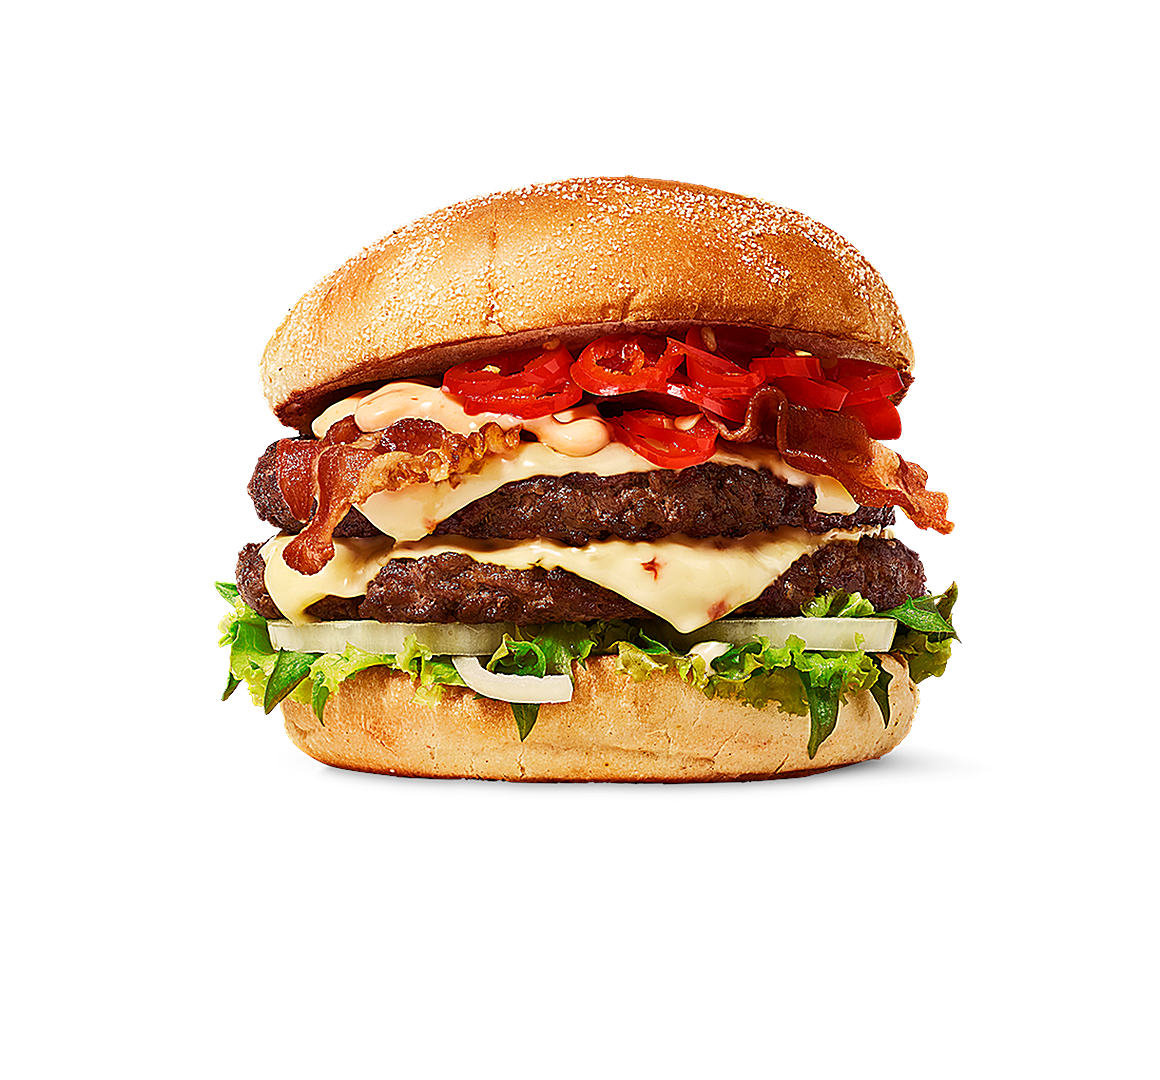 Pepper Jack ‘n’ Chili Bacon Burger